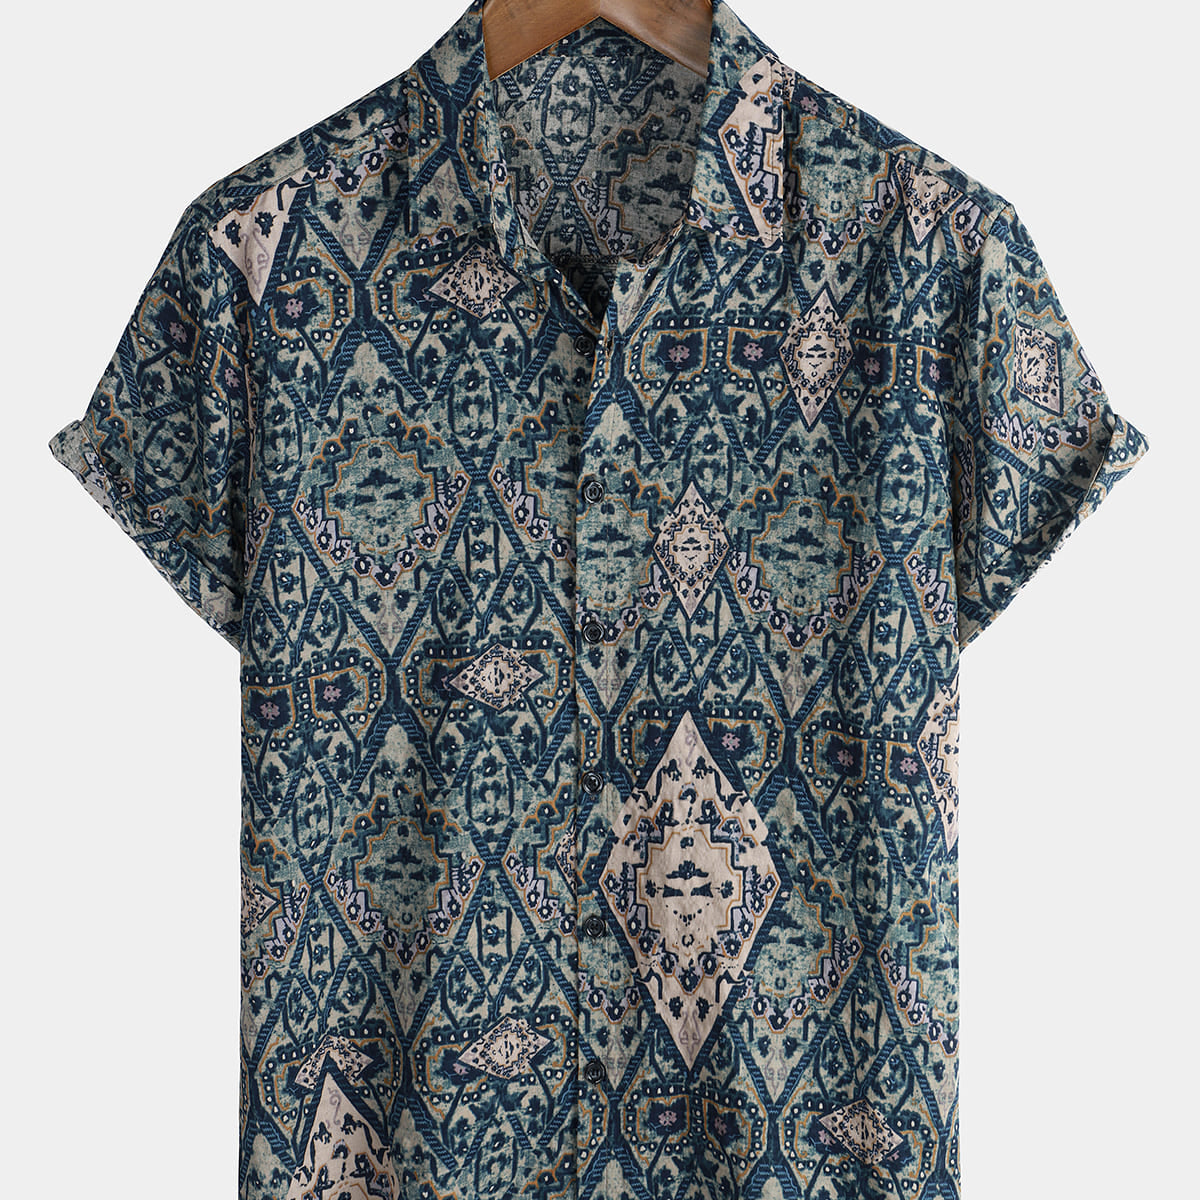 Men's Retro Floral Short Sleeve Cotton Hawaiian Button Up Shirt